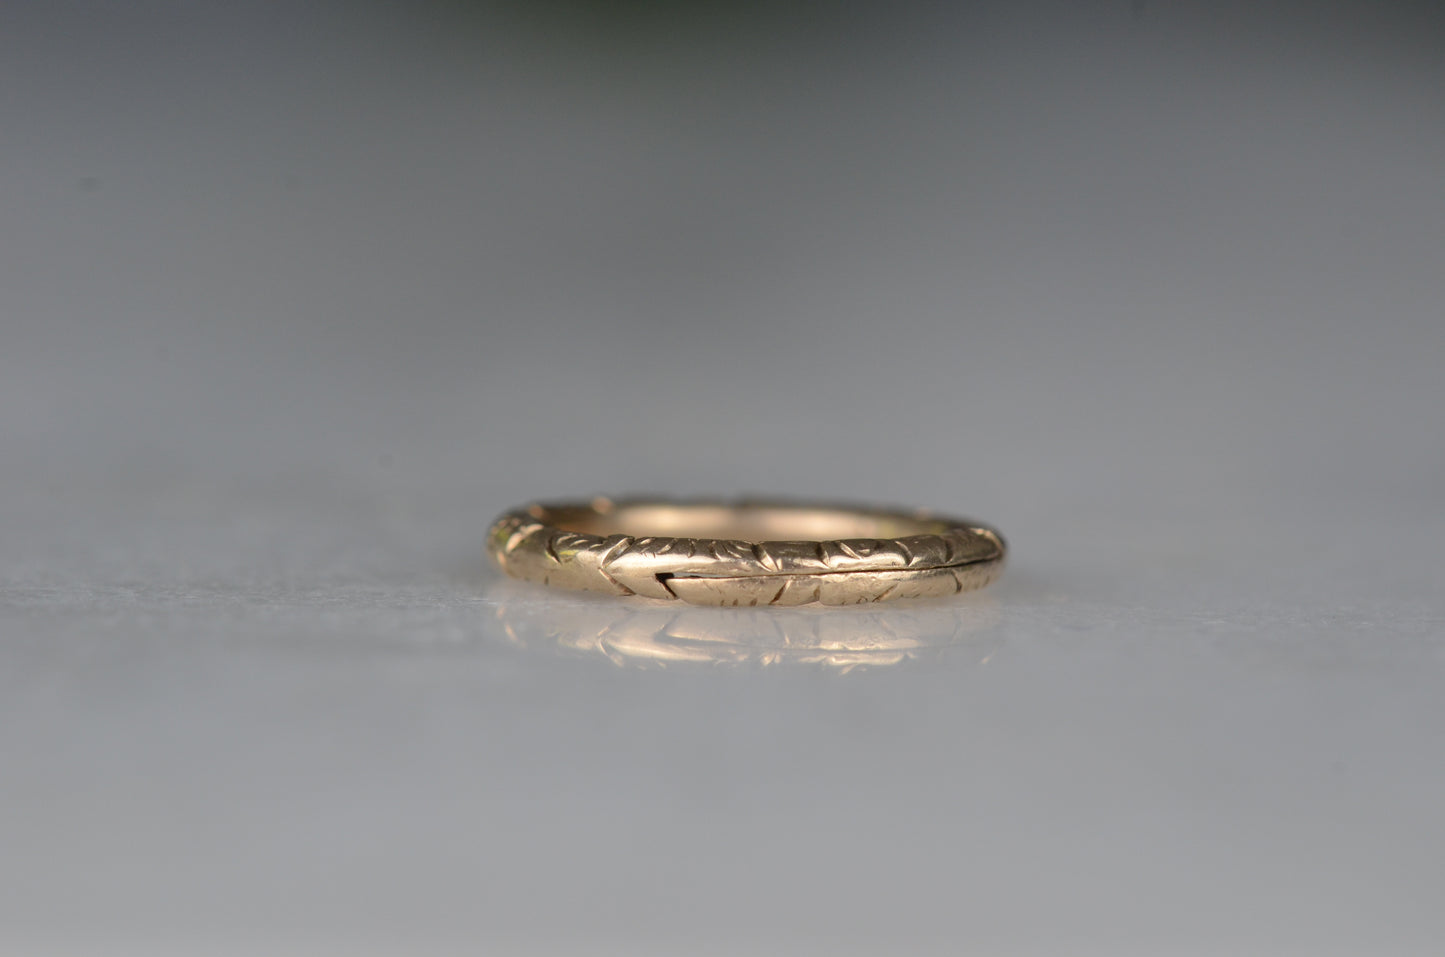 Excellent Antique Chased Split Ring